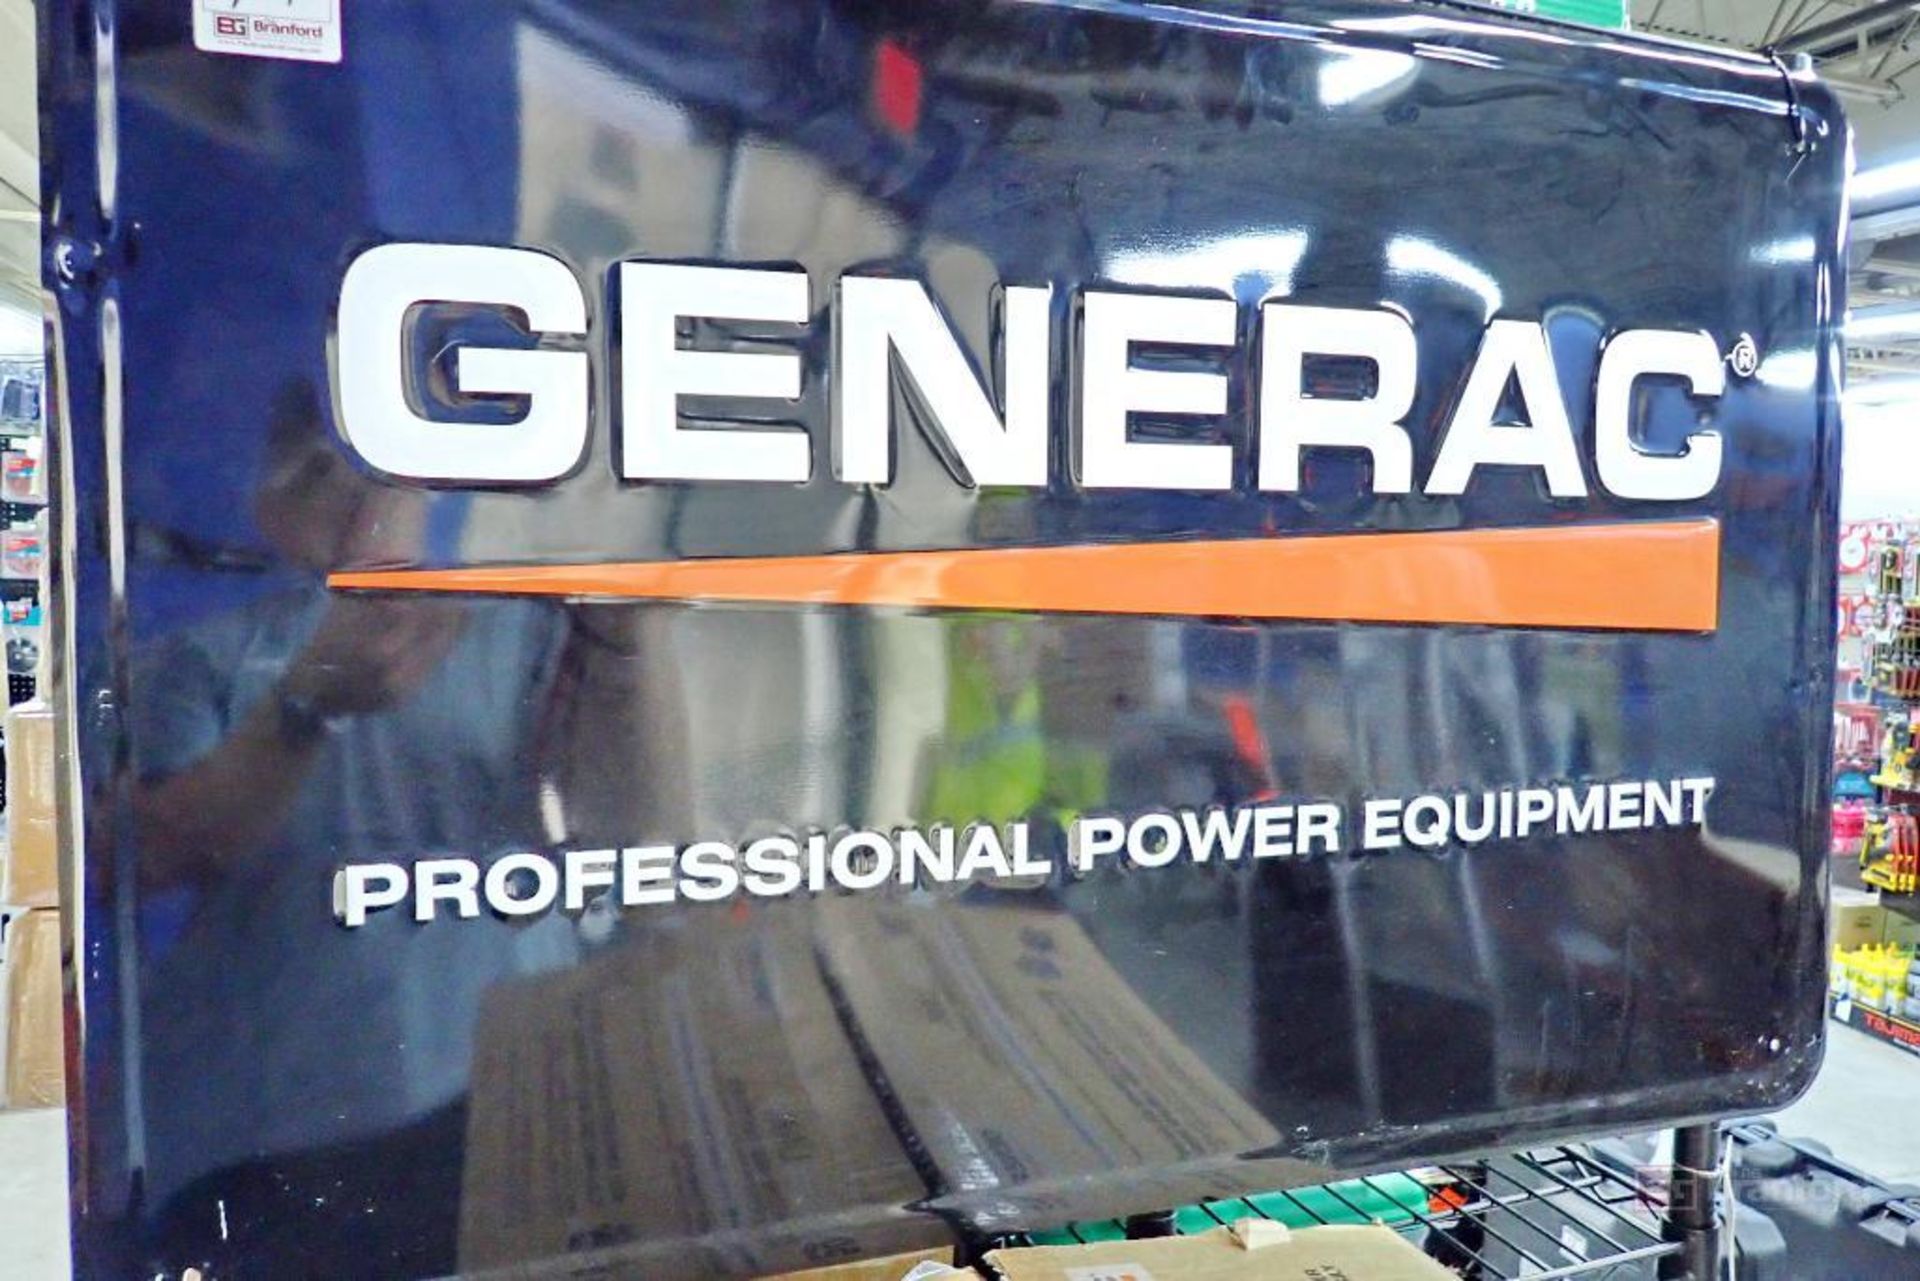 GENERAC Professional Power Equipment Sign - Image 2 of 3